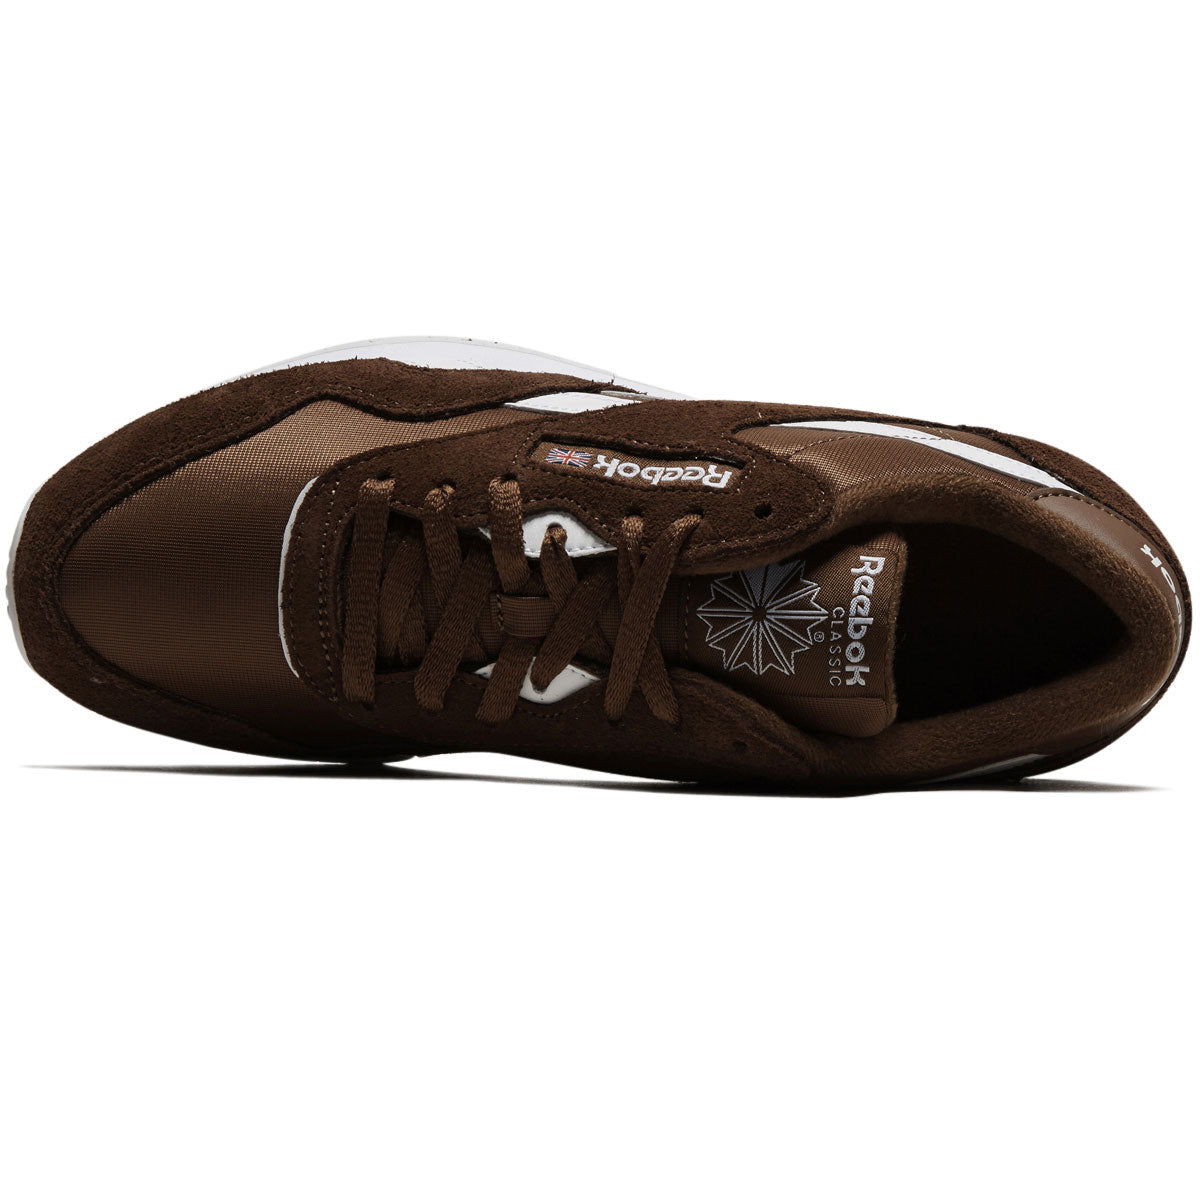 Reebok Classic Nylon Shoes - White/Brown/Brown image 3